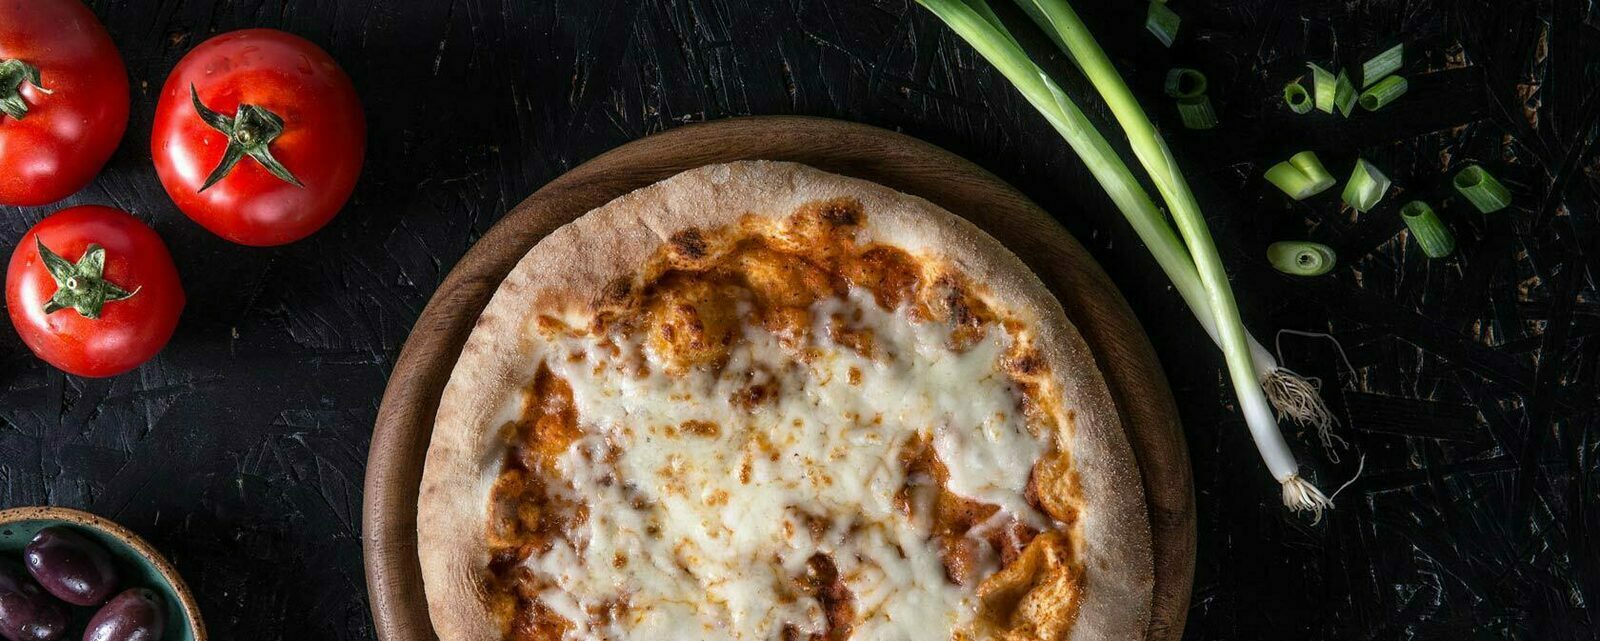 Donna Italia: de authentieke Italiaanse steenoven pizza